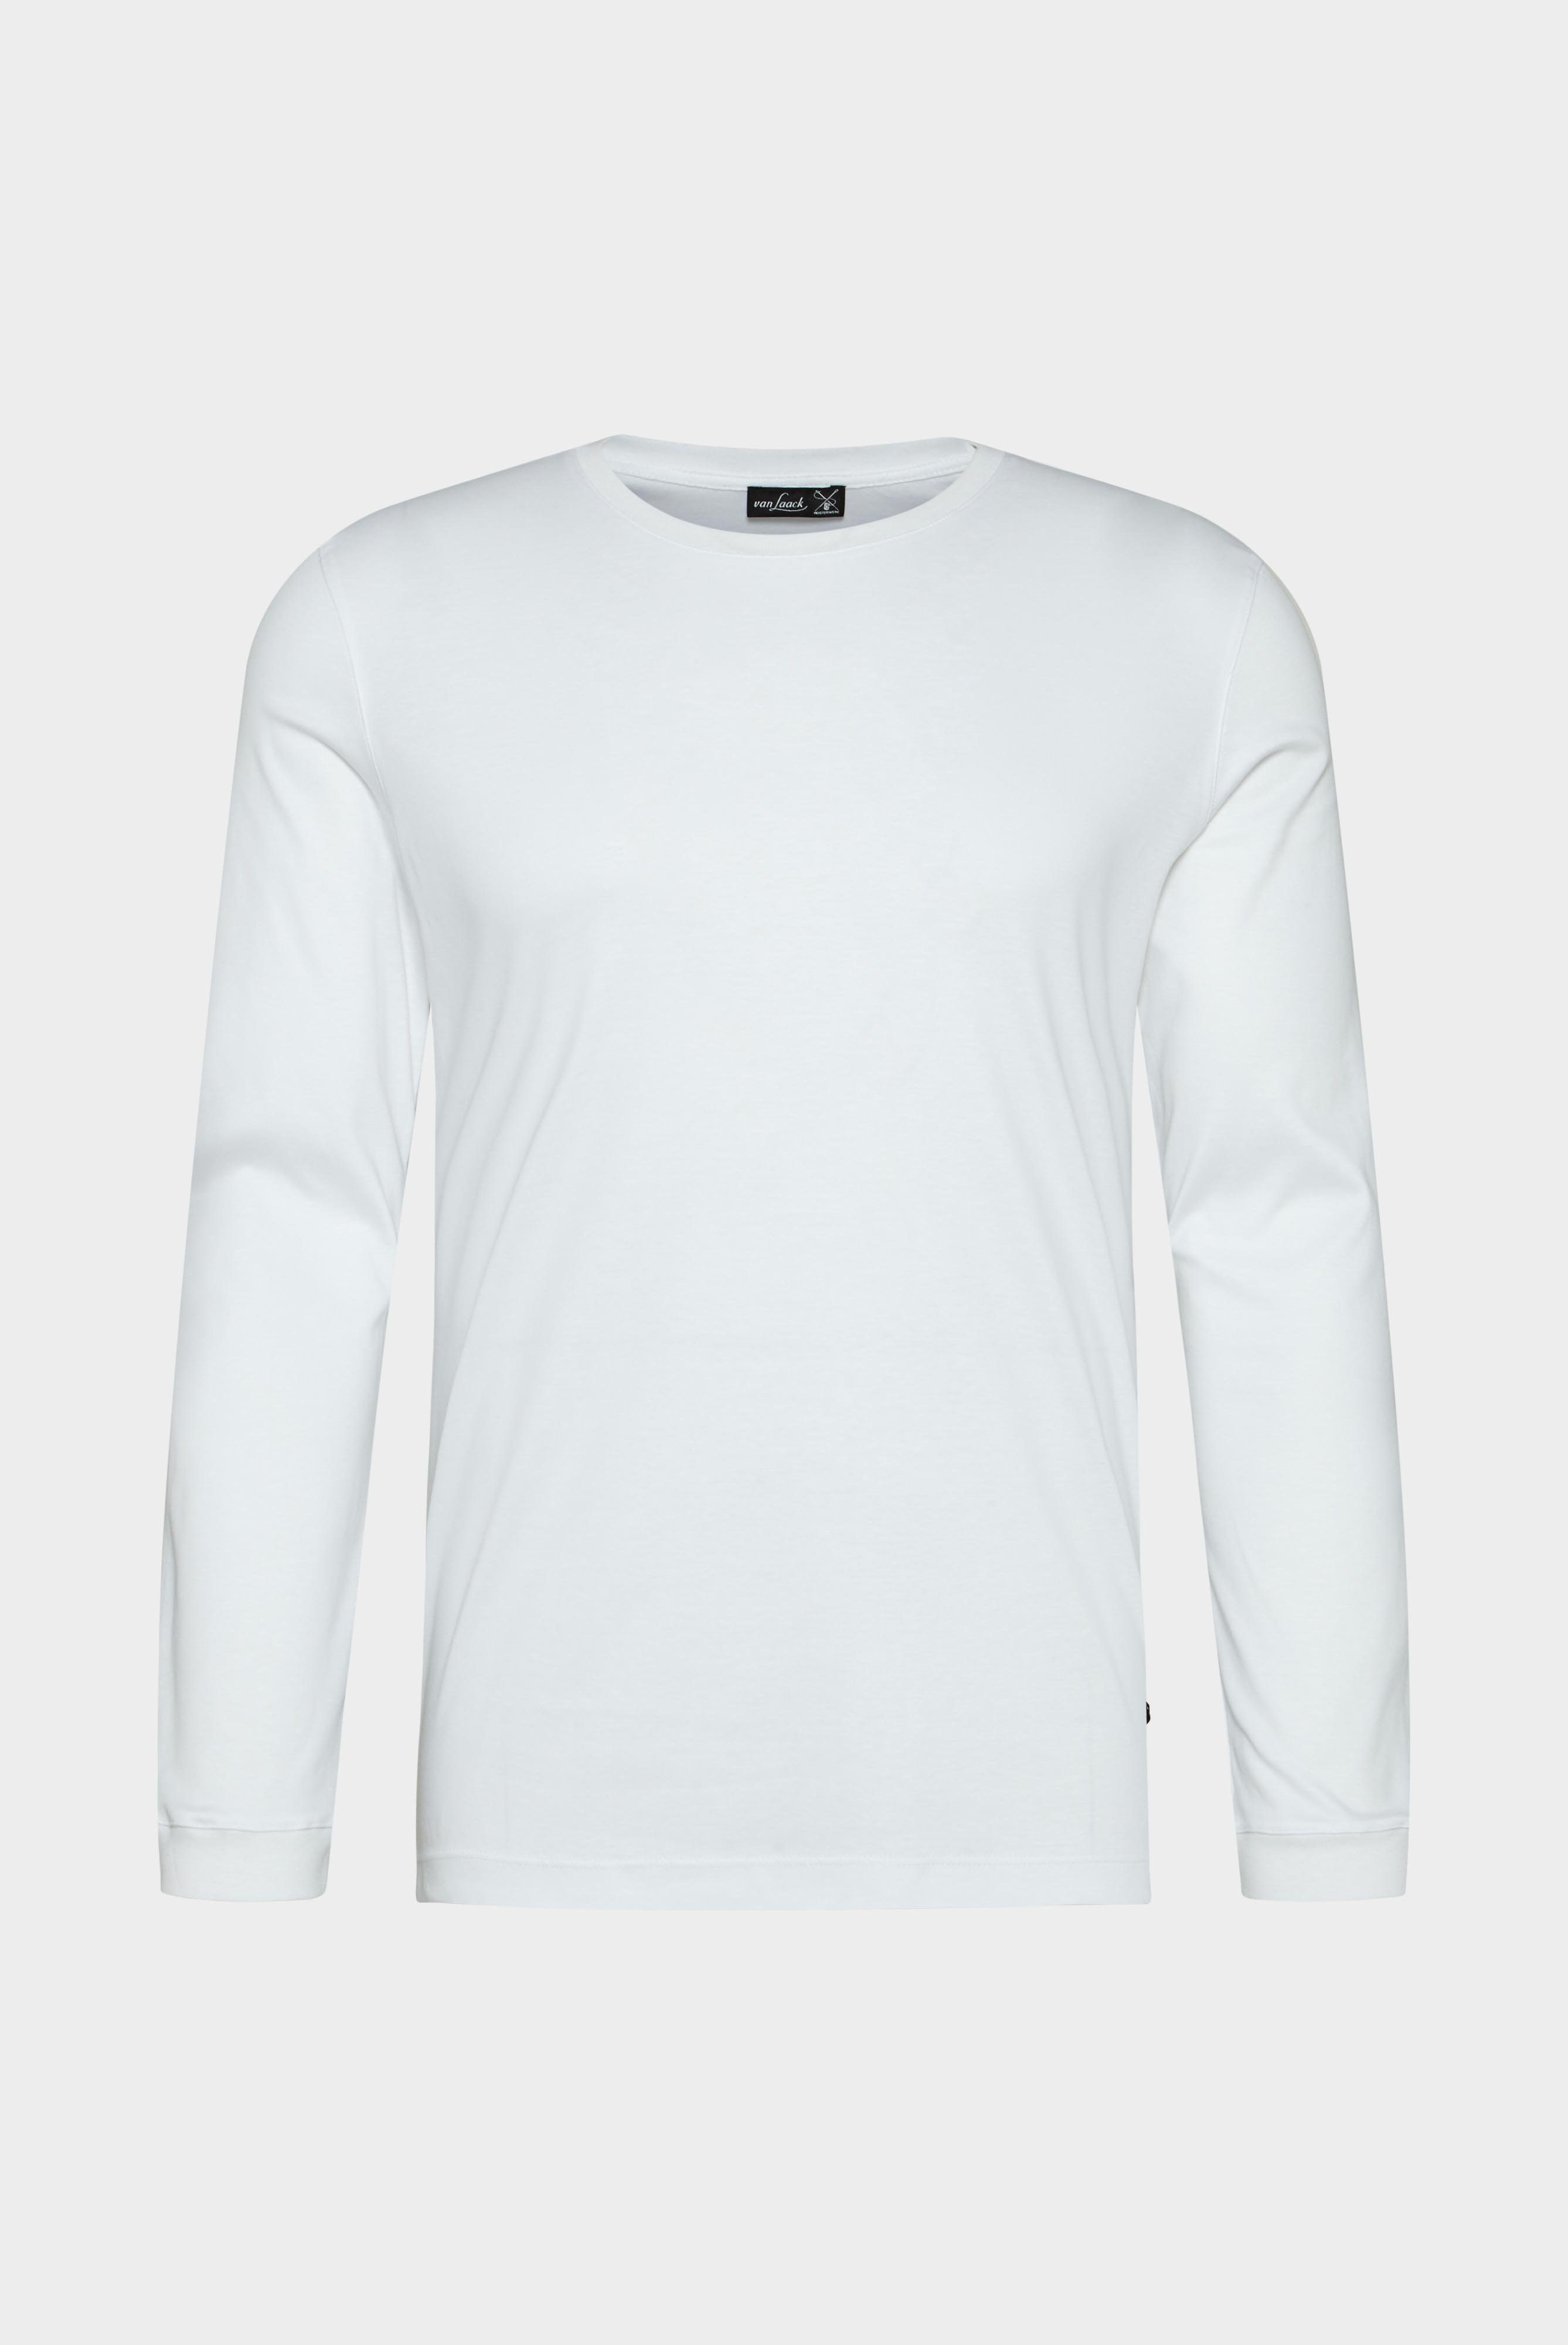 T-Shirts+Longsleeve Swiss Cotton Jersey Crew Neck T-Shirt+20.1718.UX.180031.000.M